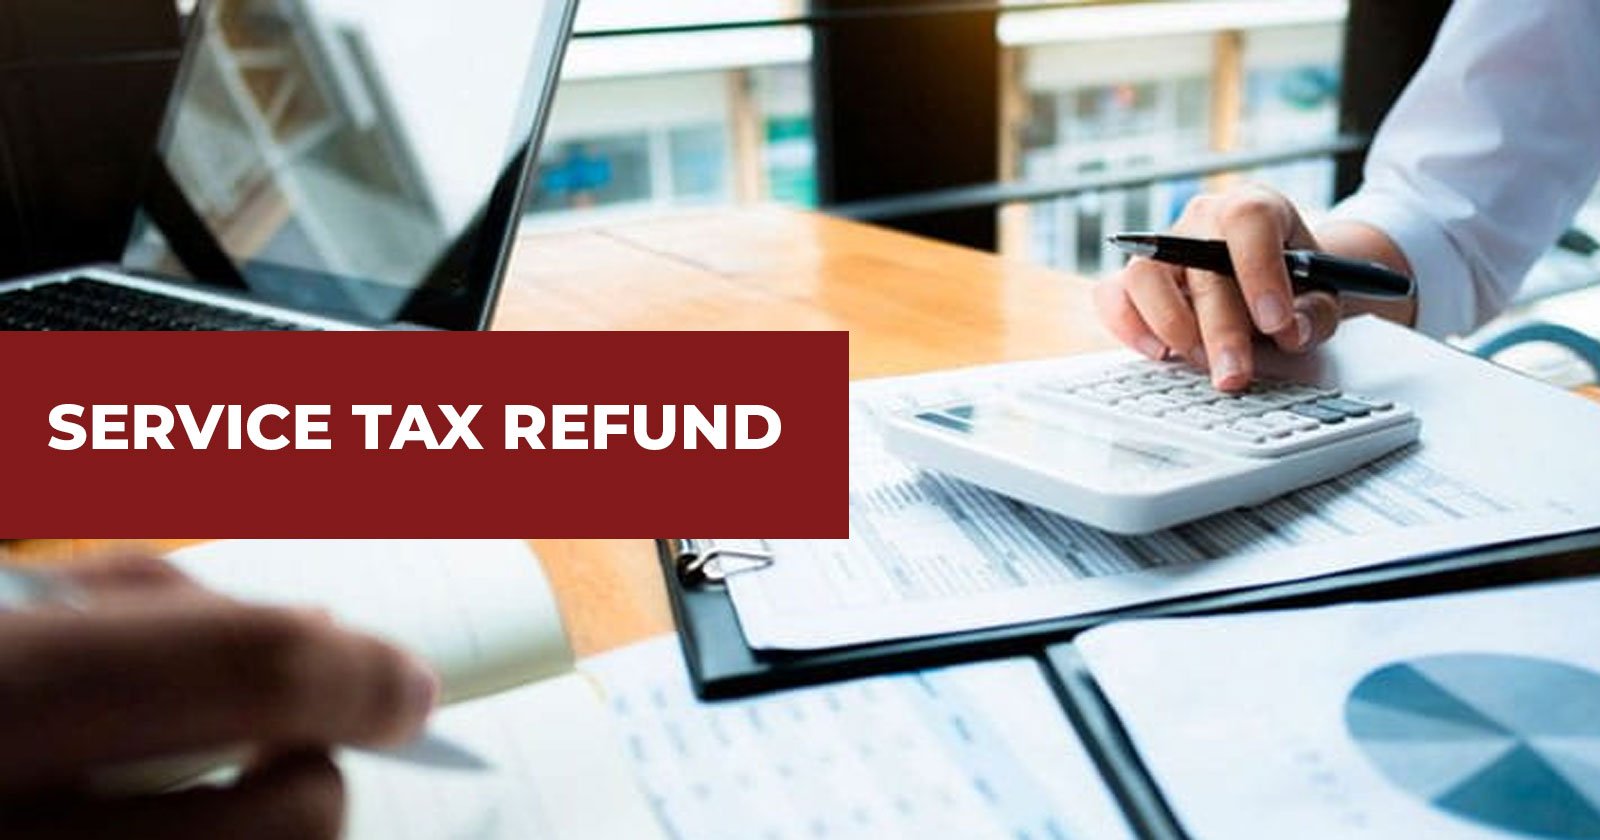 CESTAT - CESTAT Delhi - Service Tax - Delayed refund of Service Tax - taxscan